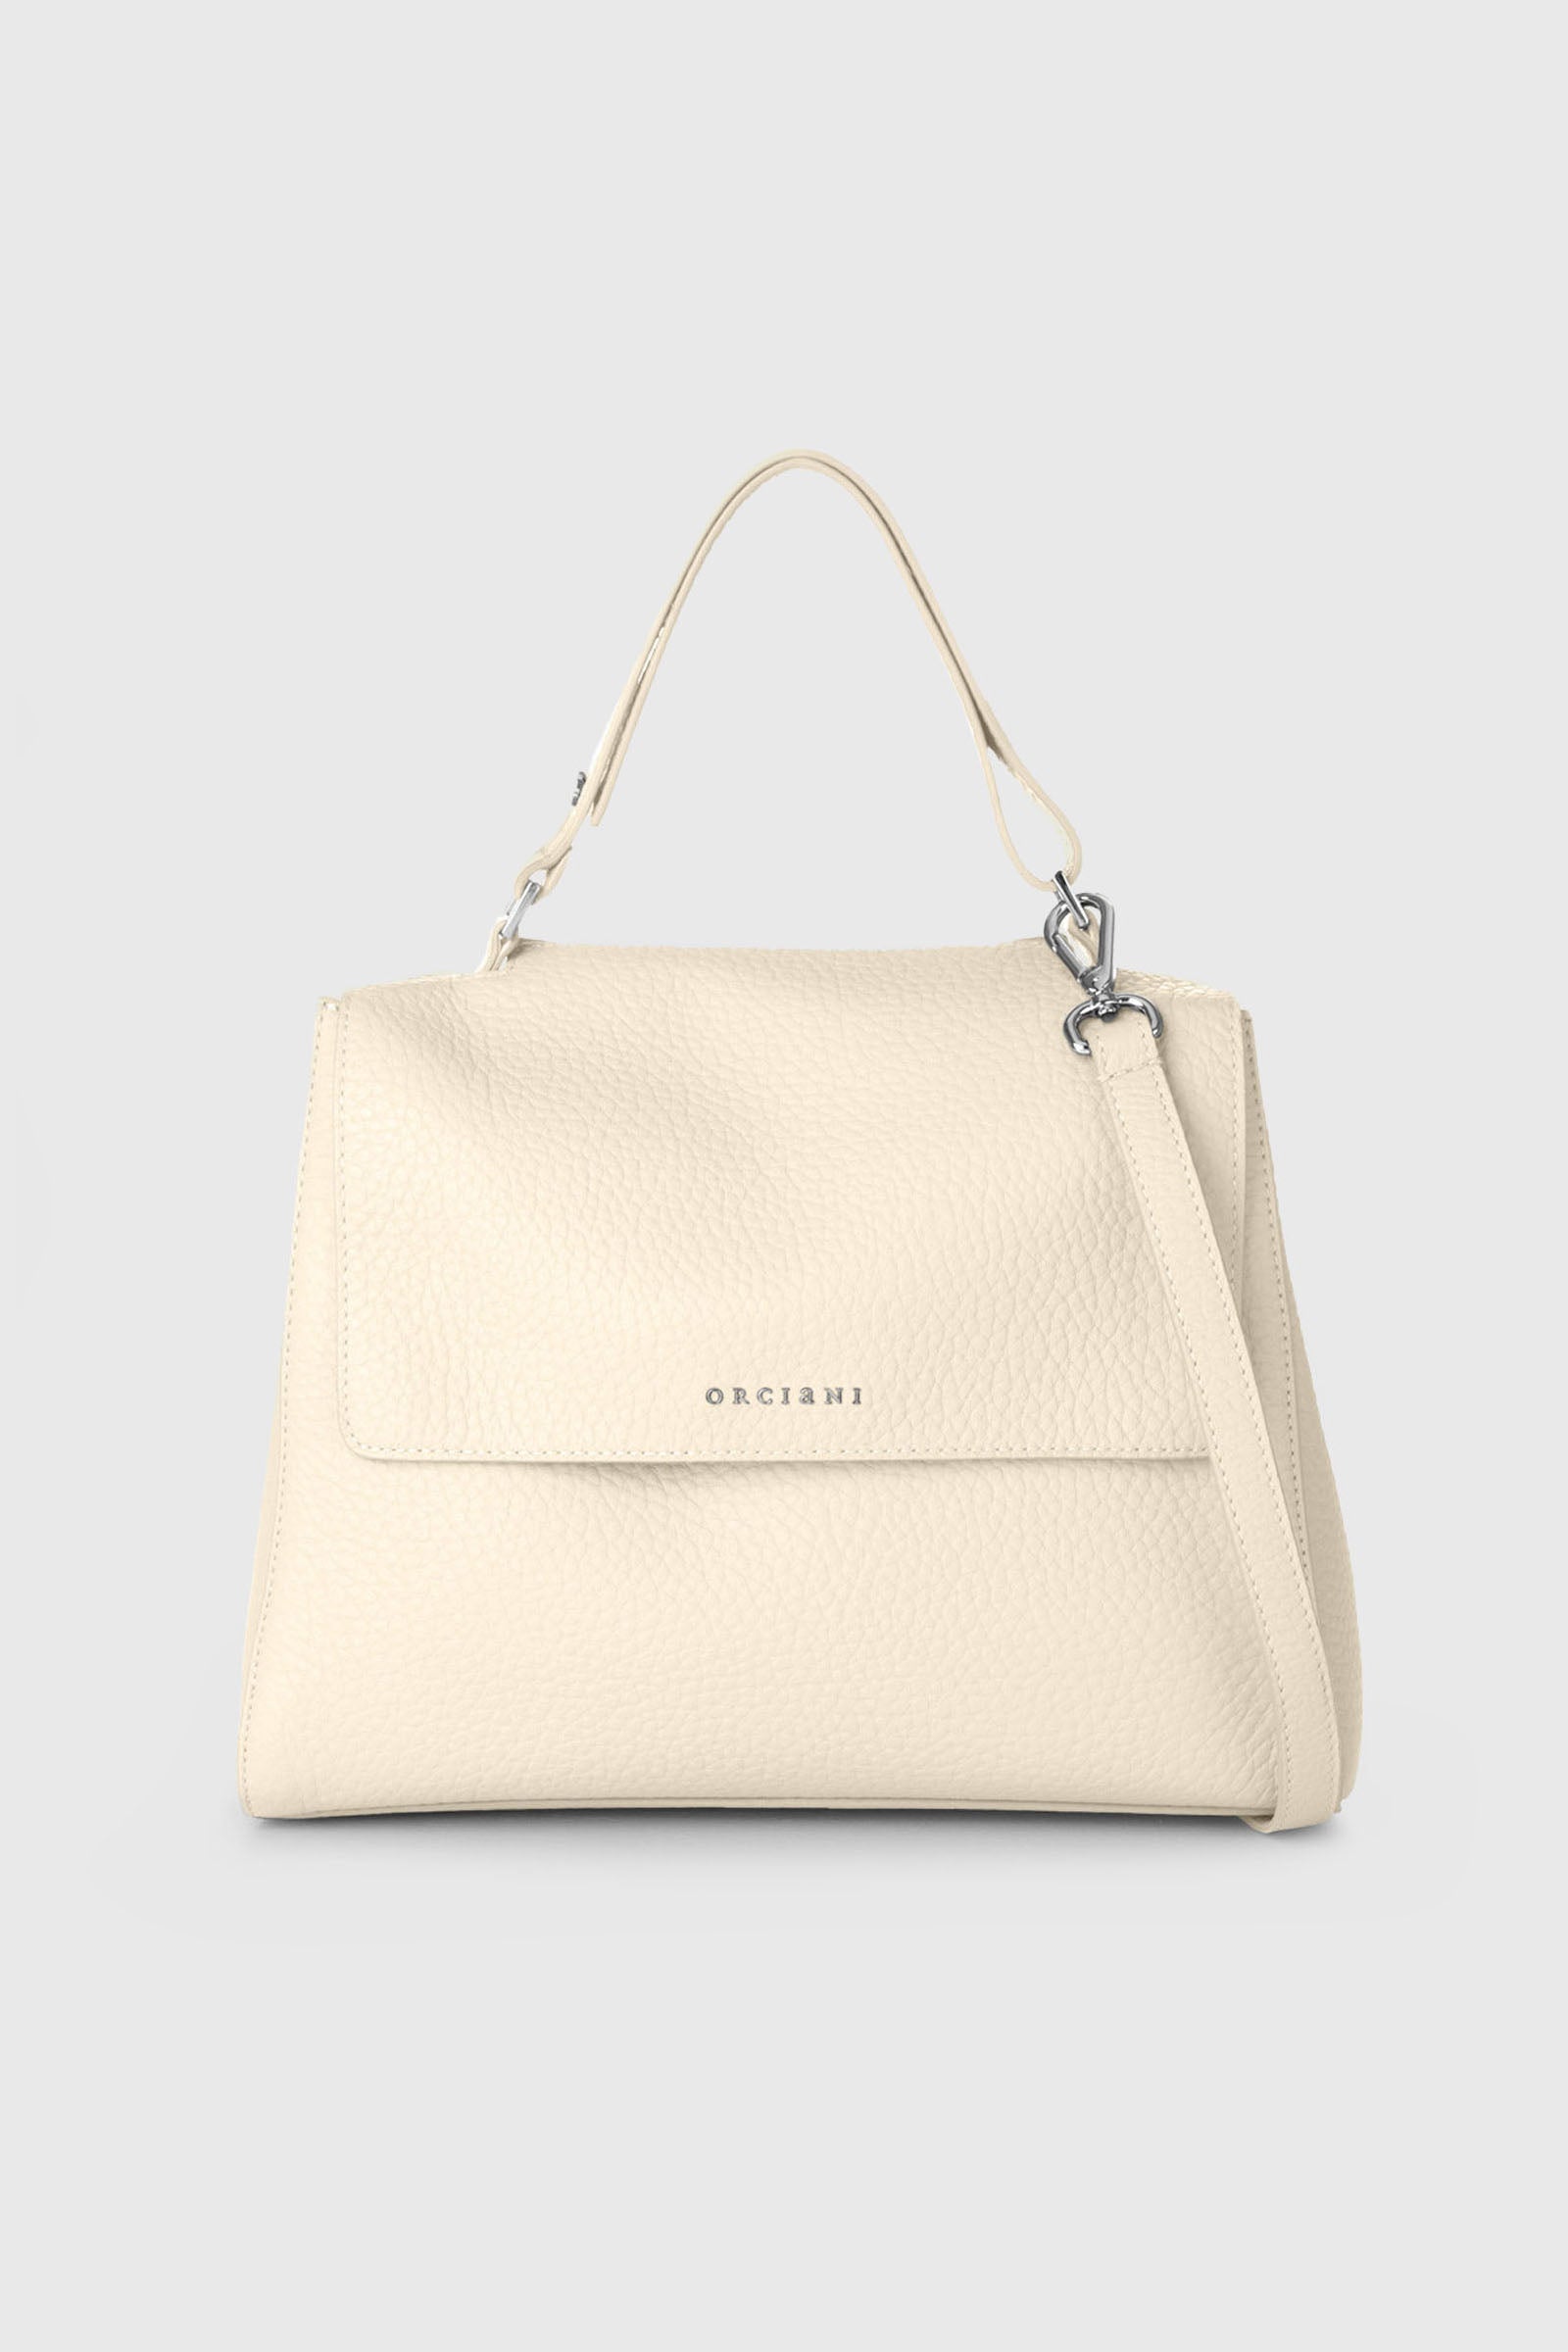 Orciani Medium Sveva Handbag in Ivory Leather - 1